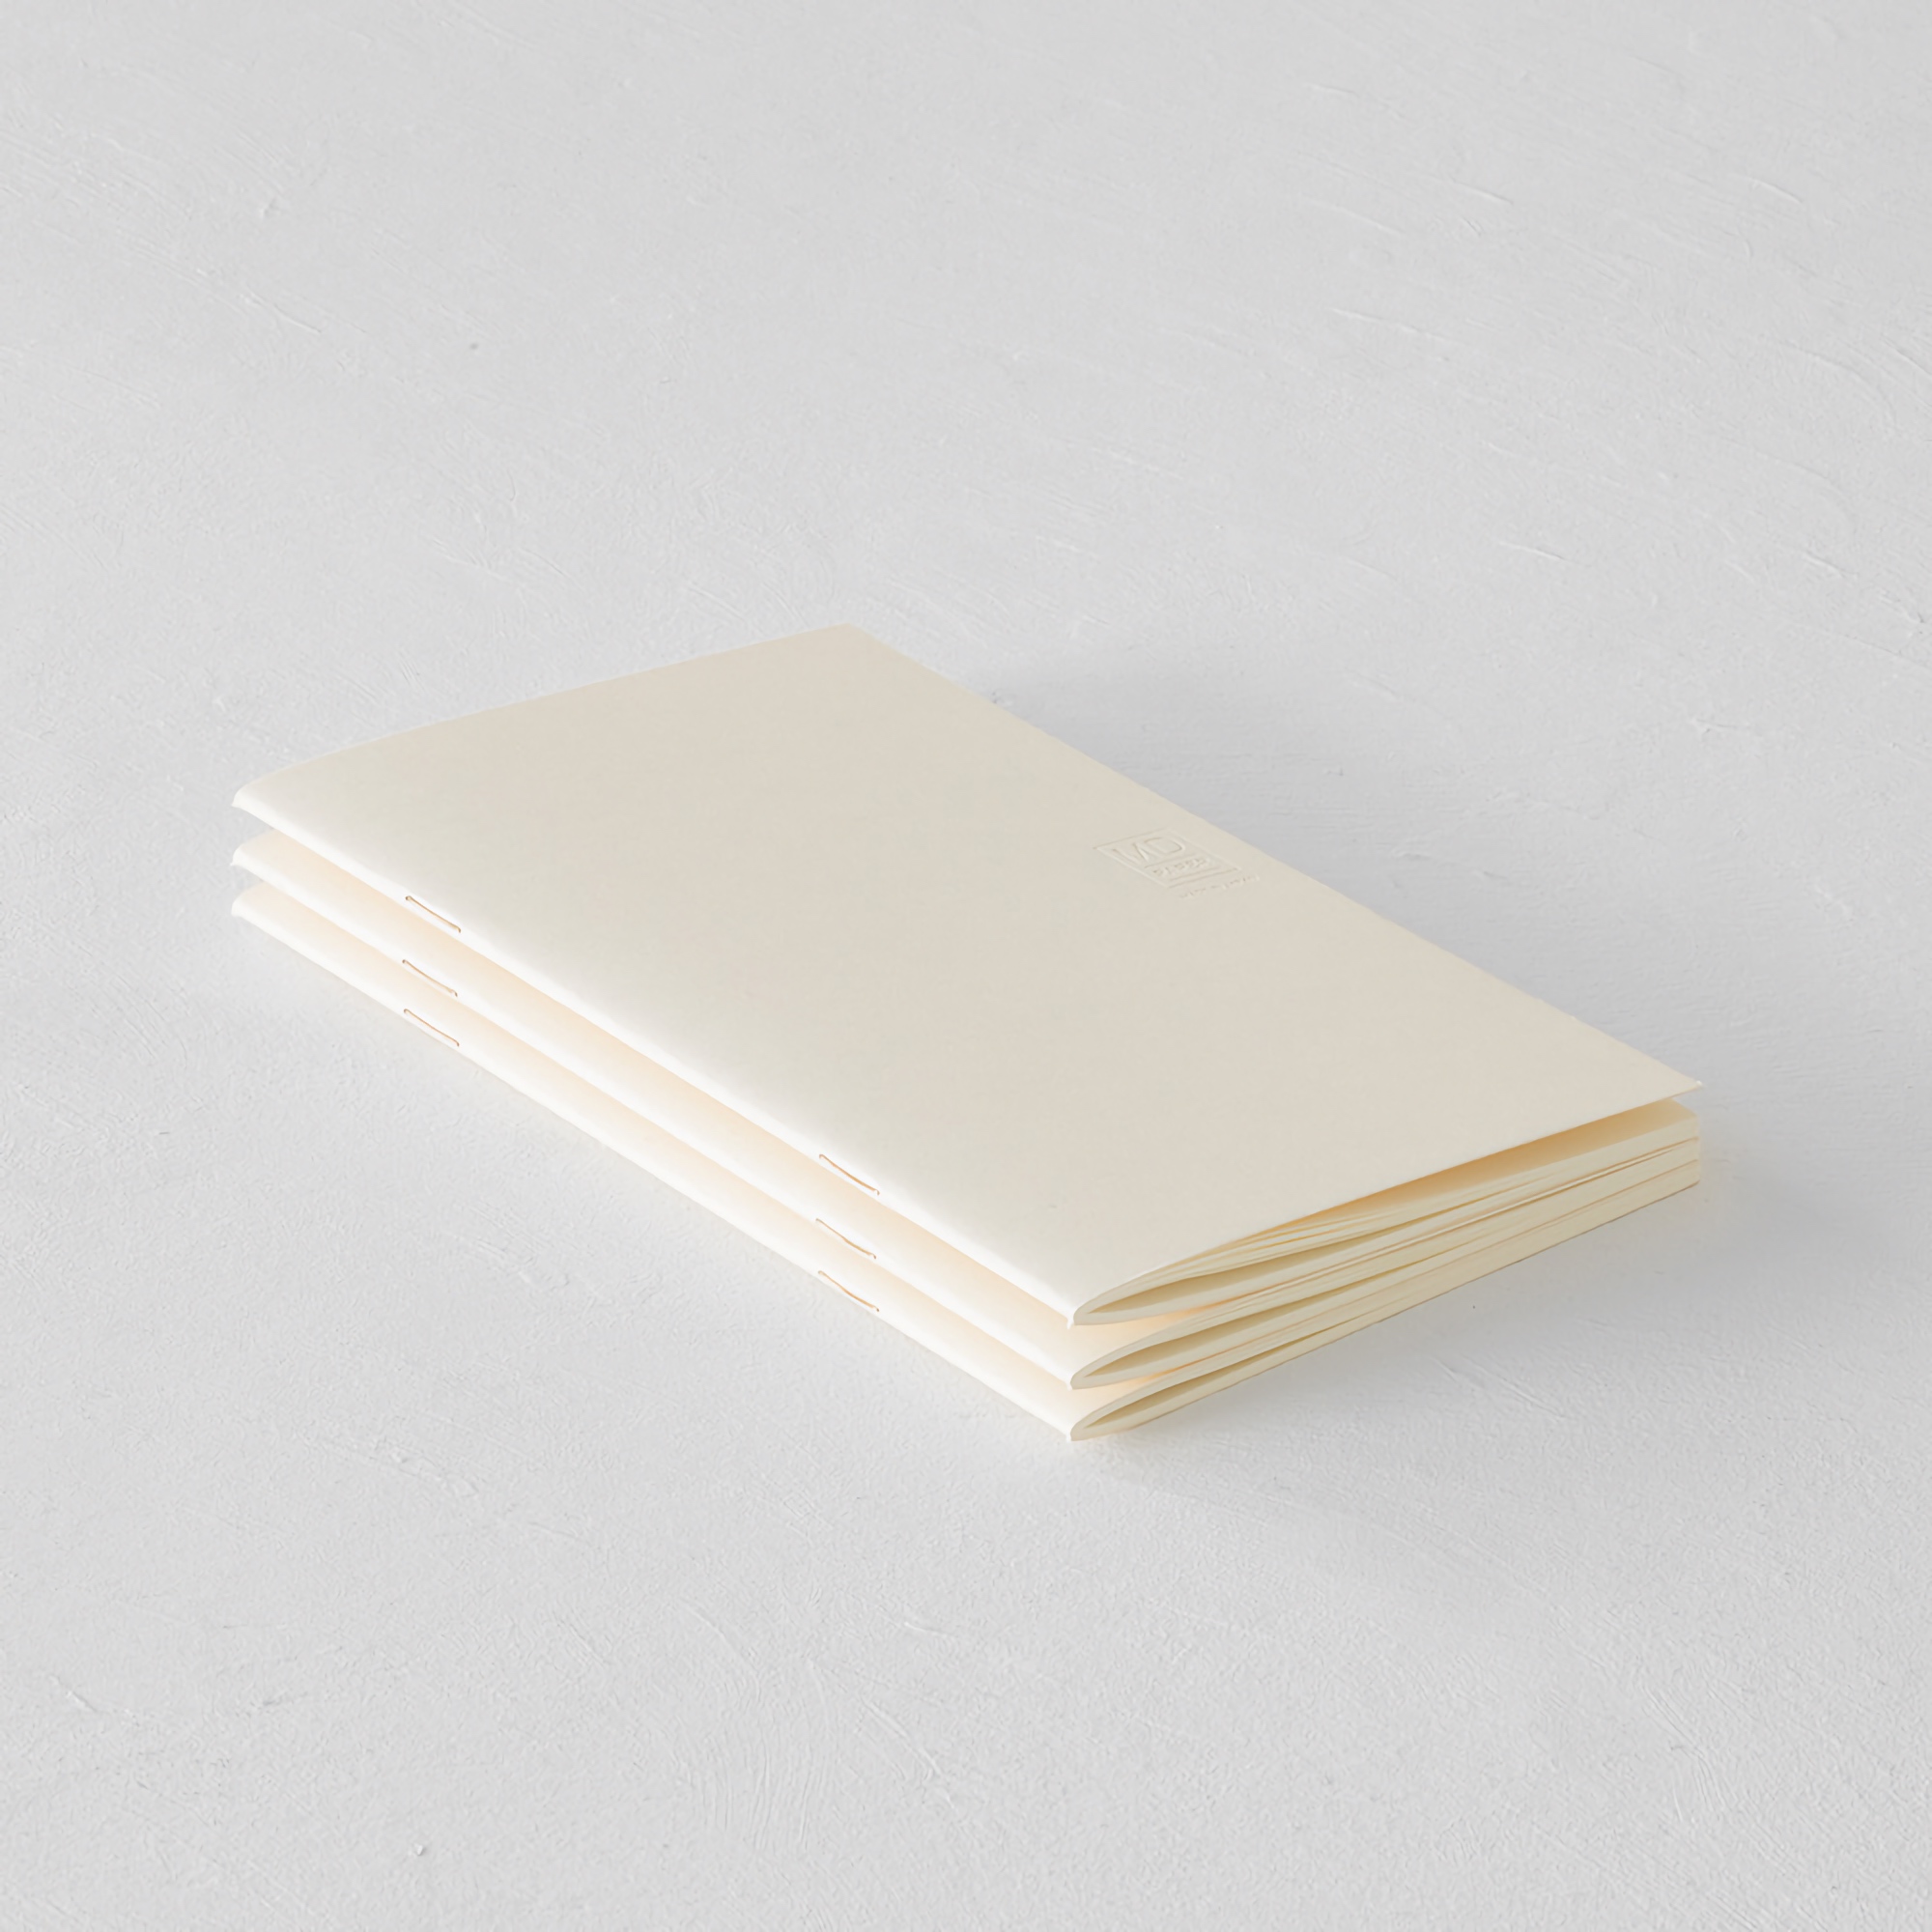 Midori MD Notebook Light [B6 Slim] Rutad 3-pack